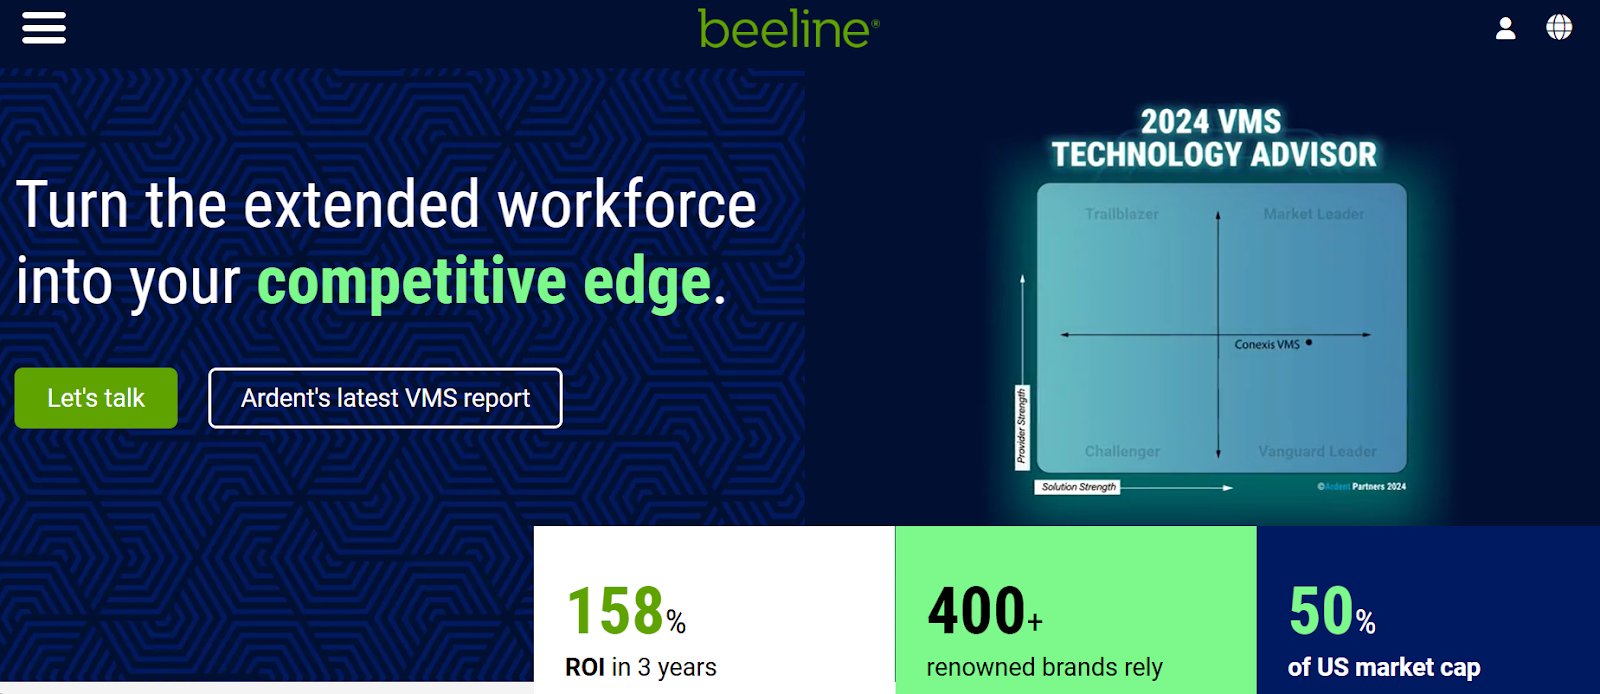 Beeline website snapshot highlighting the services it offers.